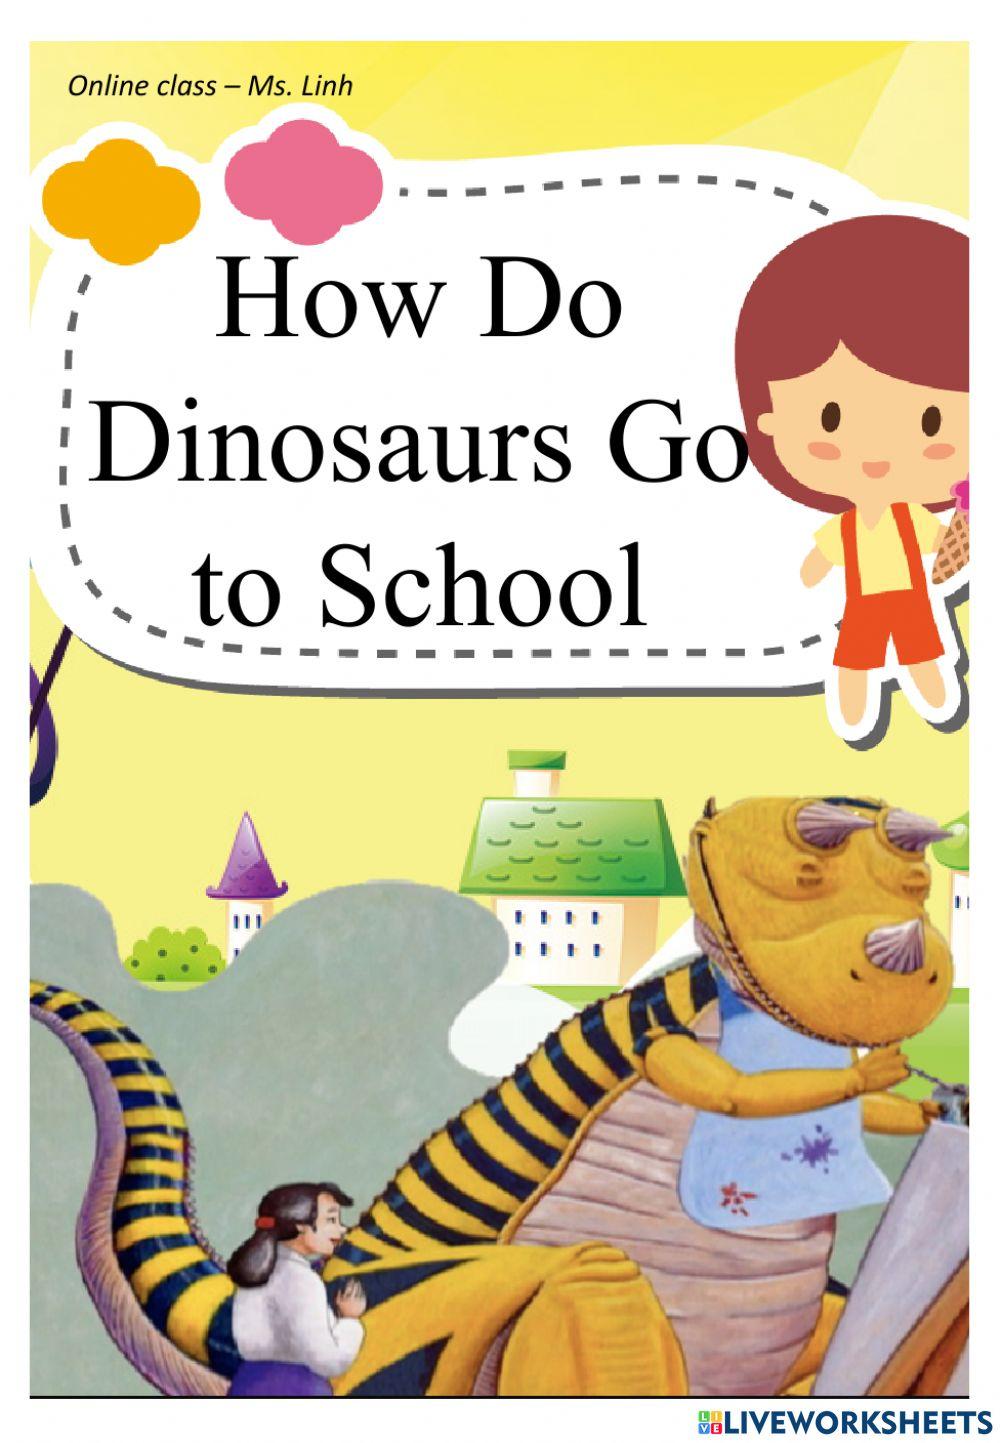 How a dinosaurs go to school